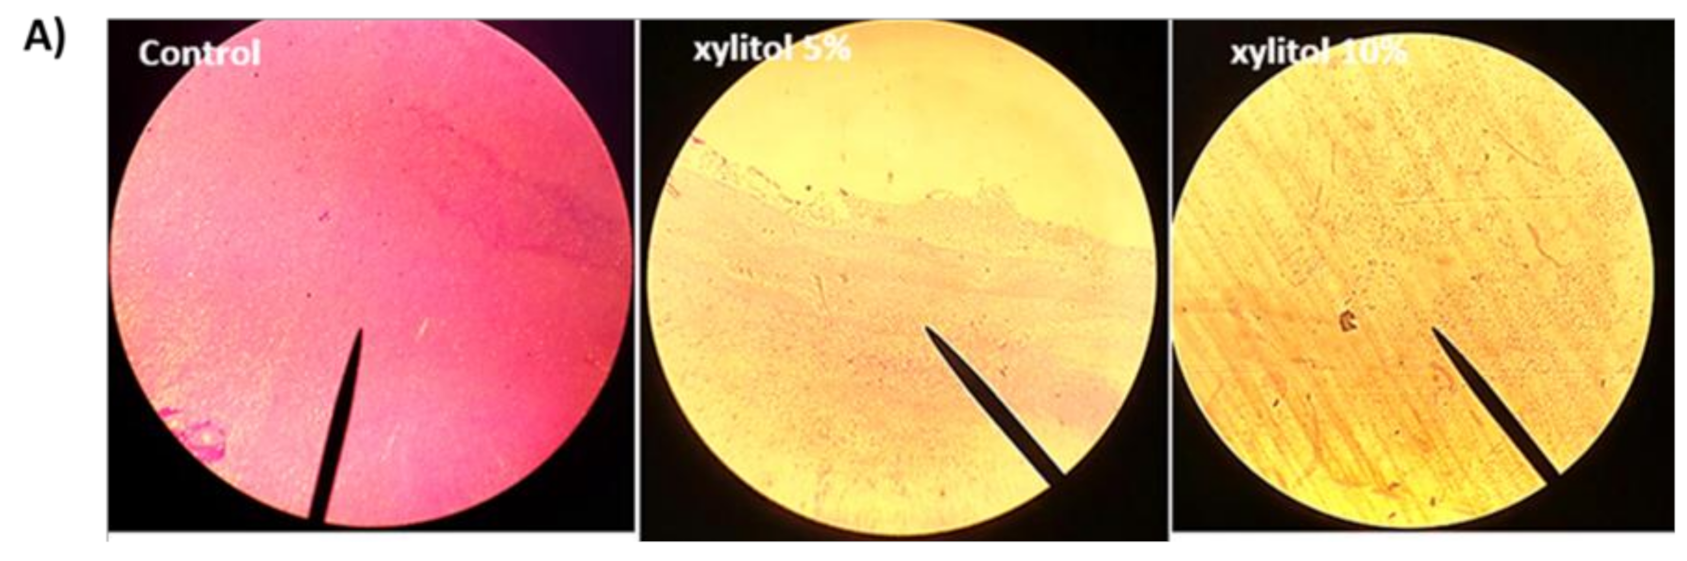 Xylitol dysbiosis În ce se află inulina? Xylitol dysbiosis